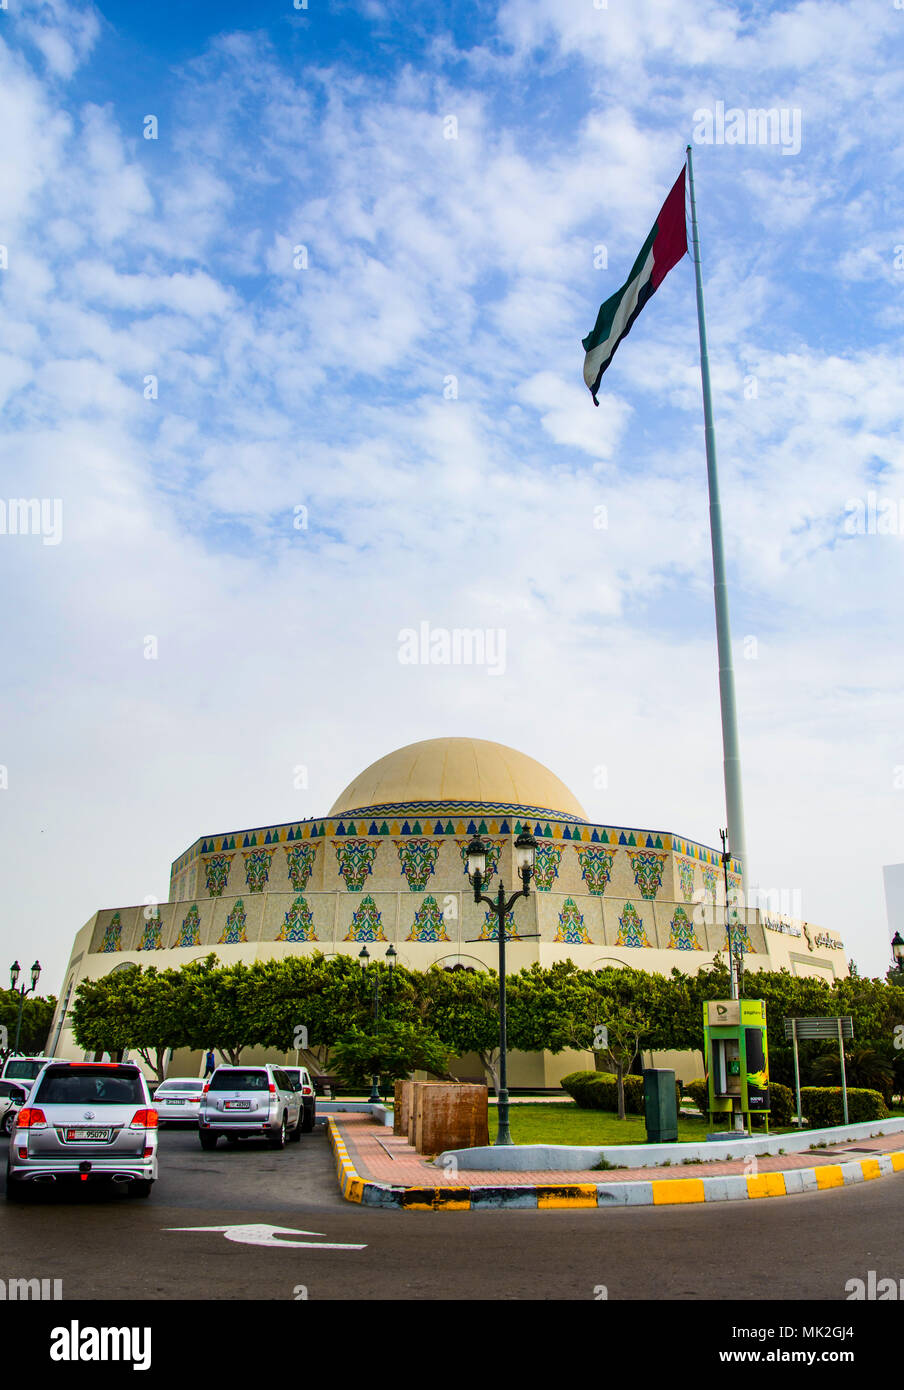 Abu Dhabi, UAE - April 27, 2018: Abu dhabi theater building located on Al Marina island at day time Stock Photo